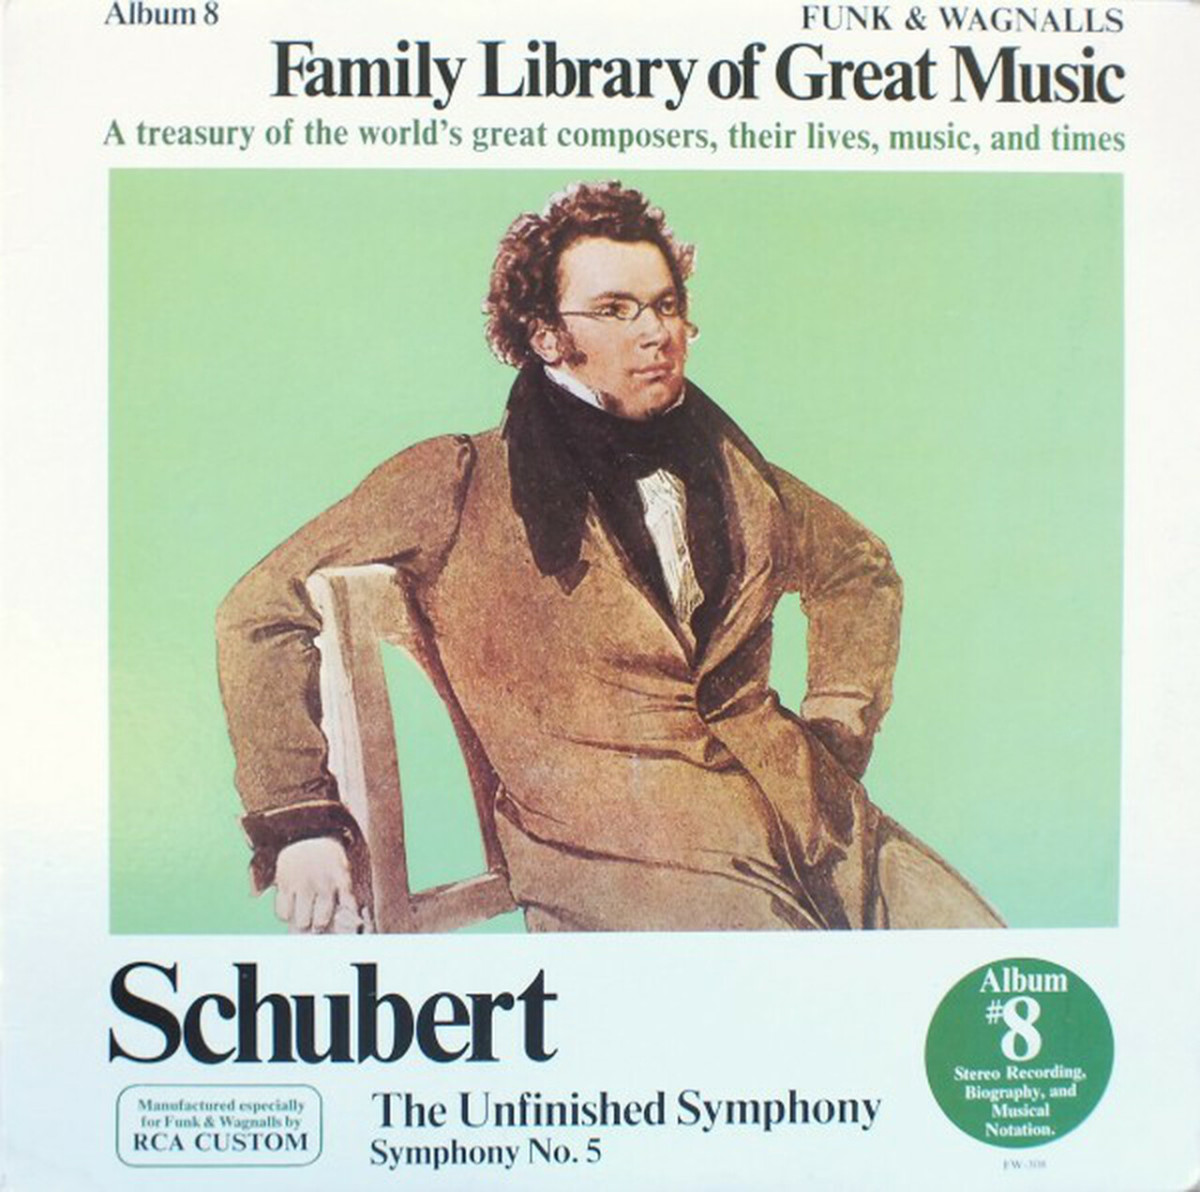 Schubert’s Unfinished Symphony